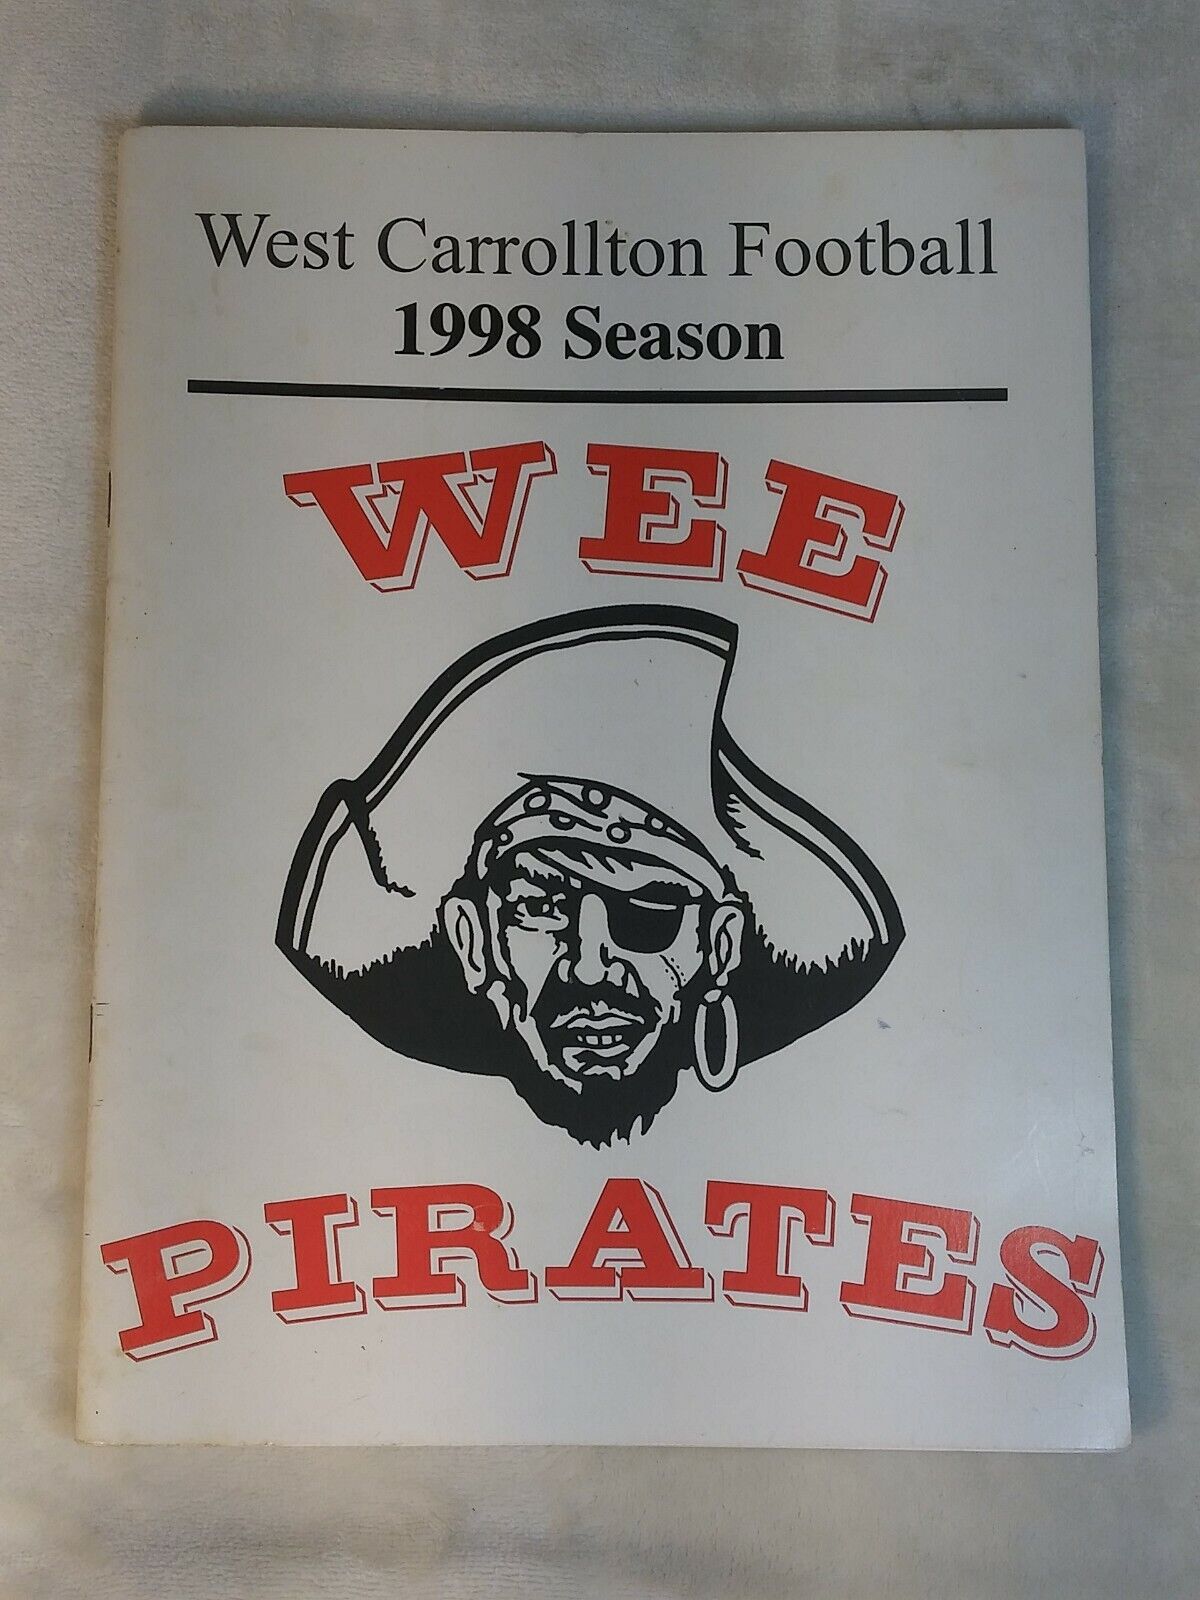 West Carrollton Football Program Season 1998 Wee Pirates Ohio OH